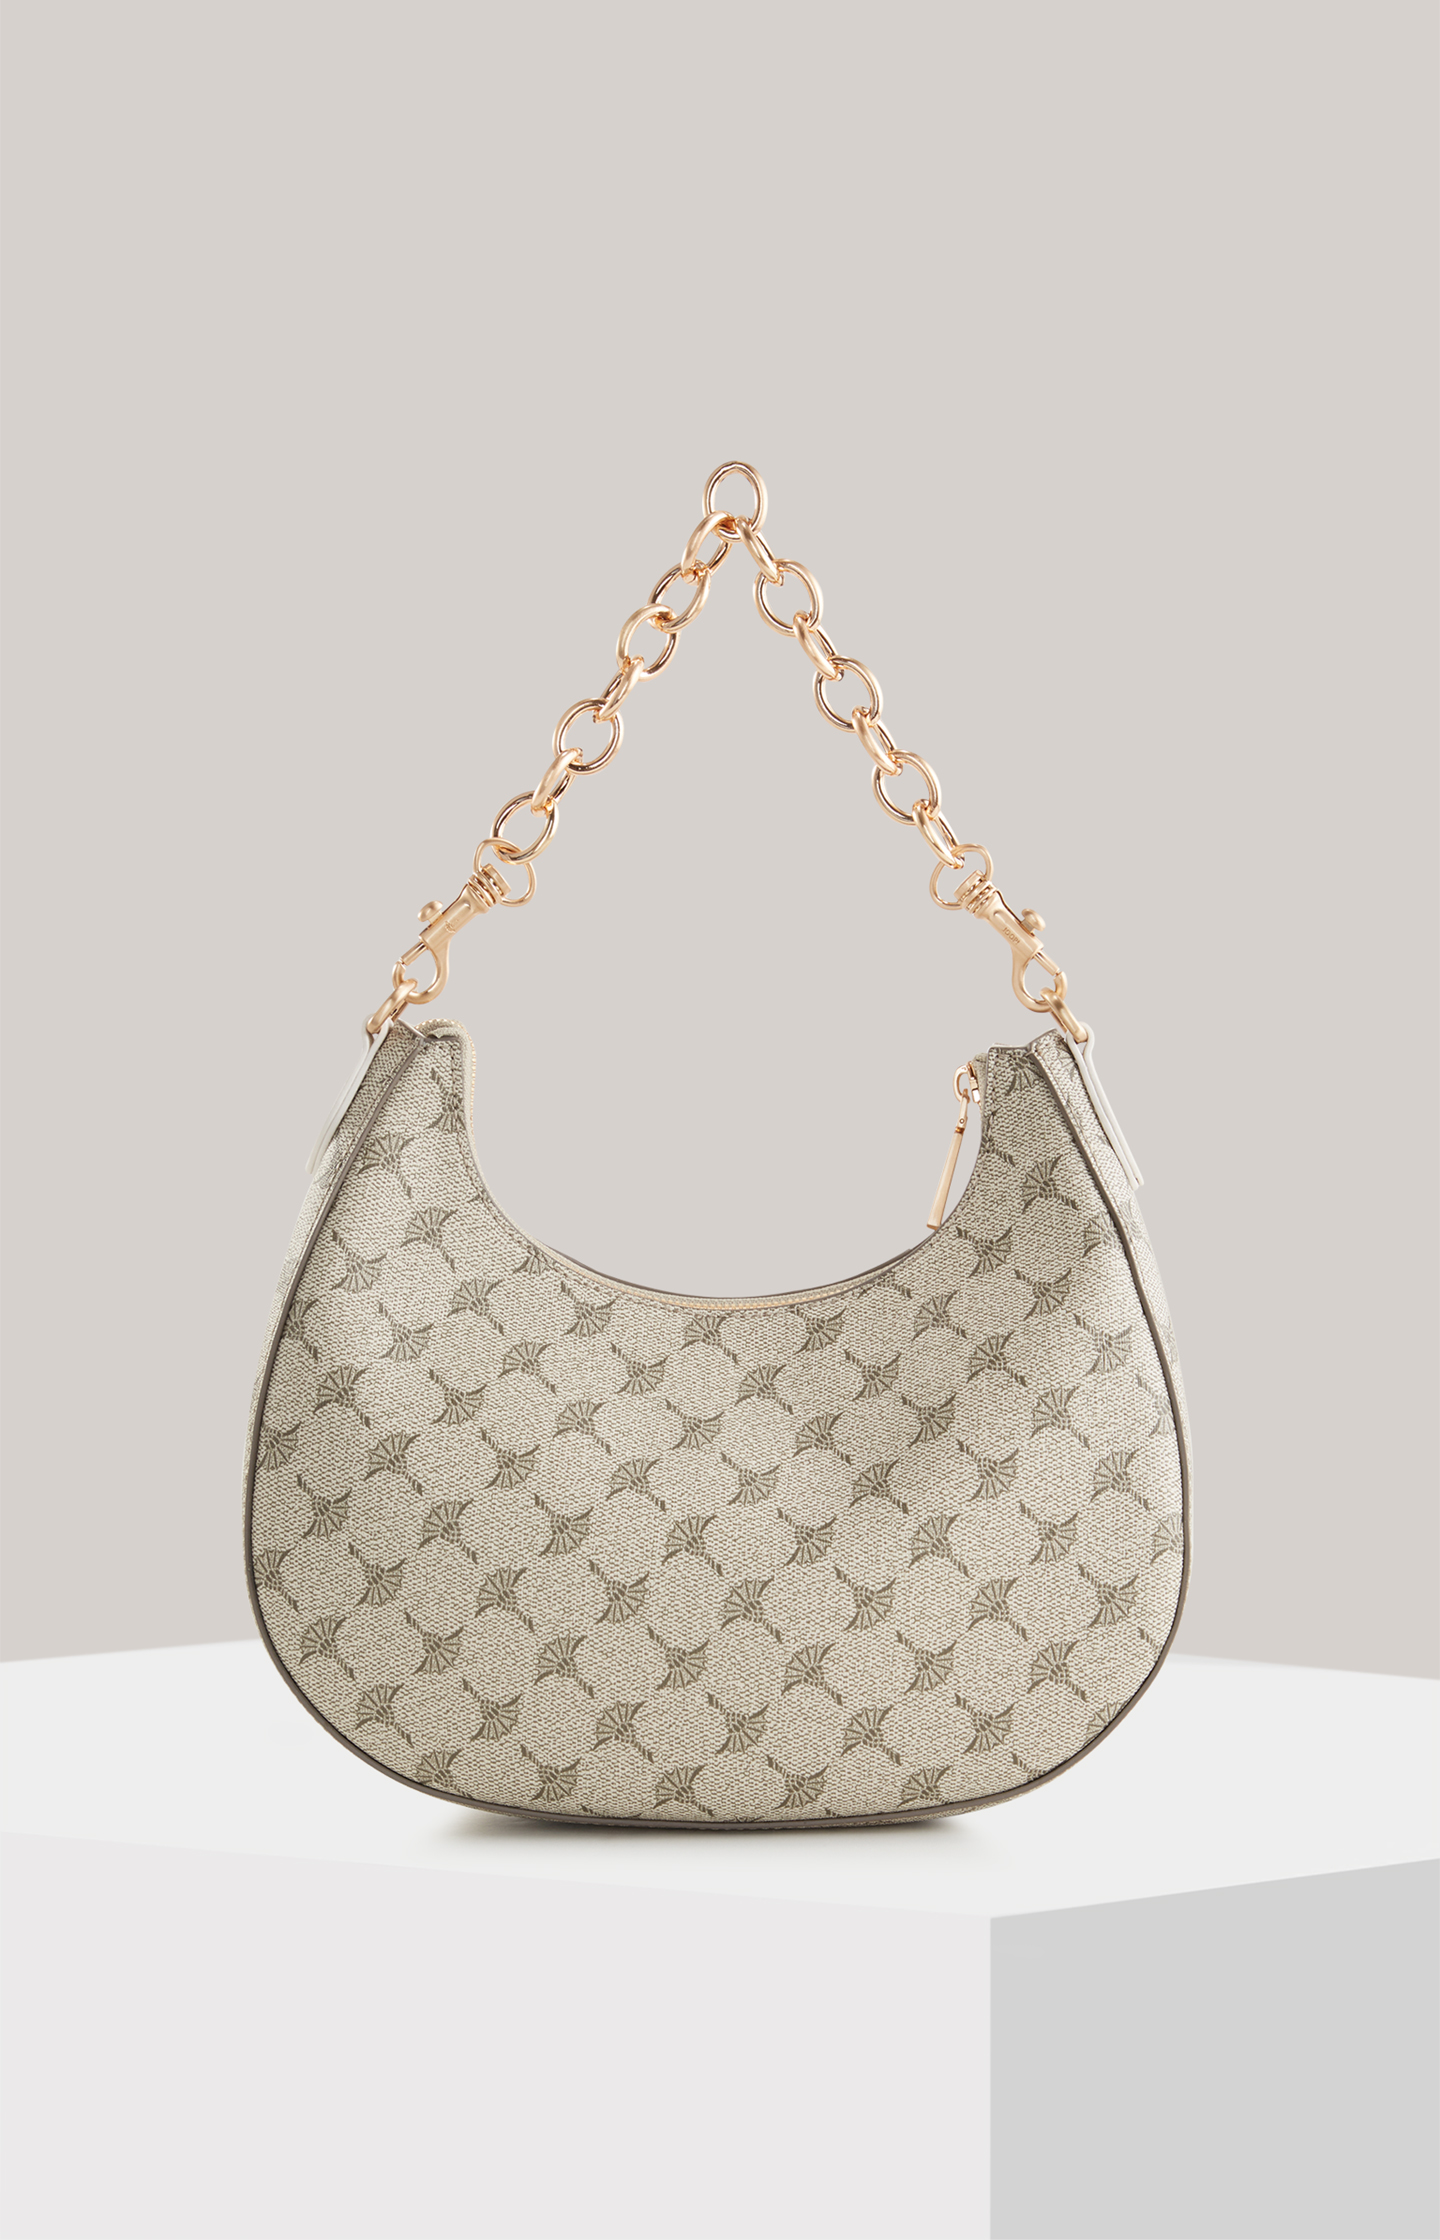 Mazzolino Misto Annina Shoulder Bag in a Beige/Pink Pattern - in the ...